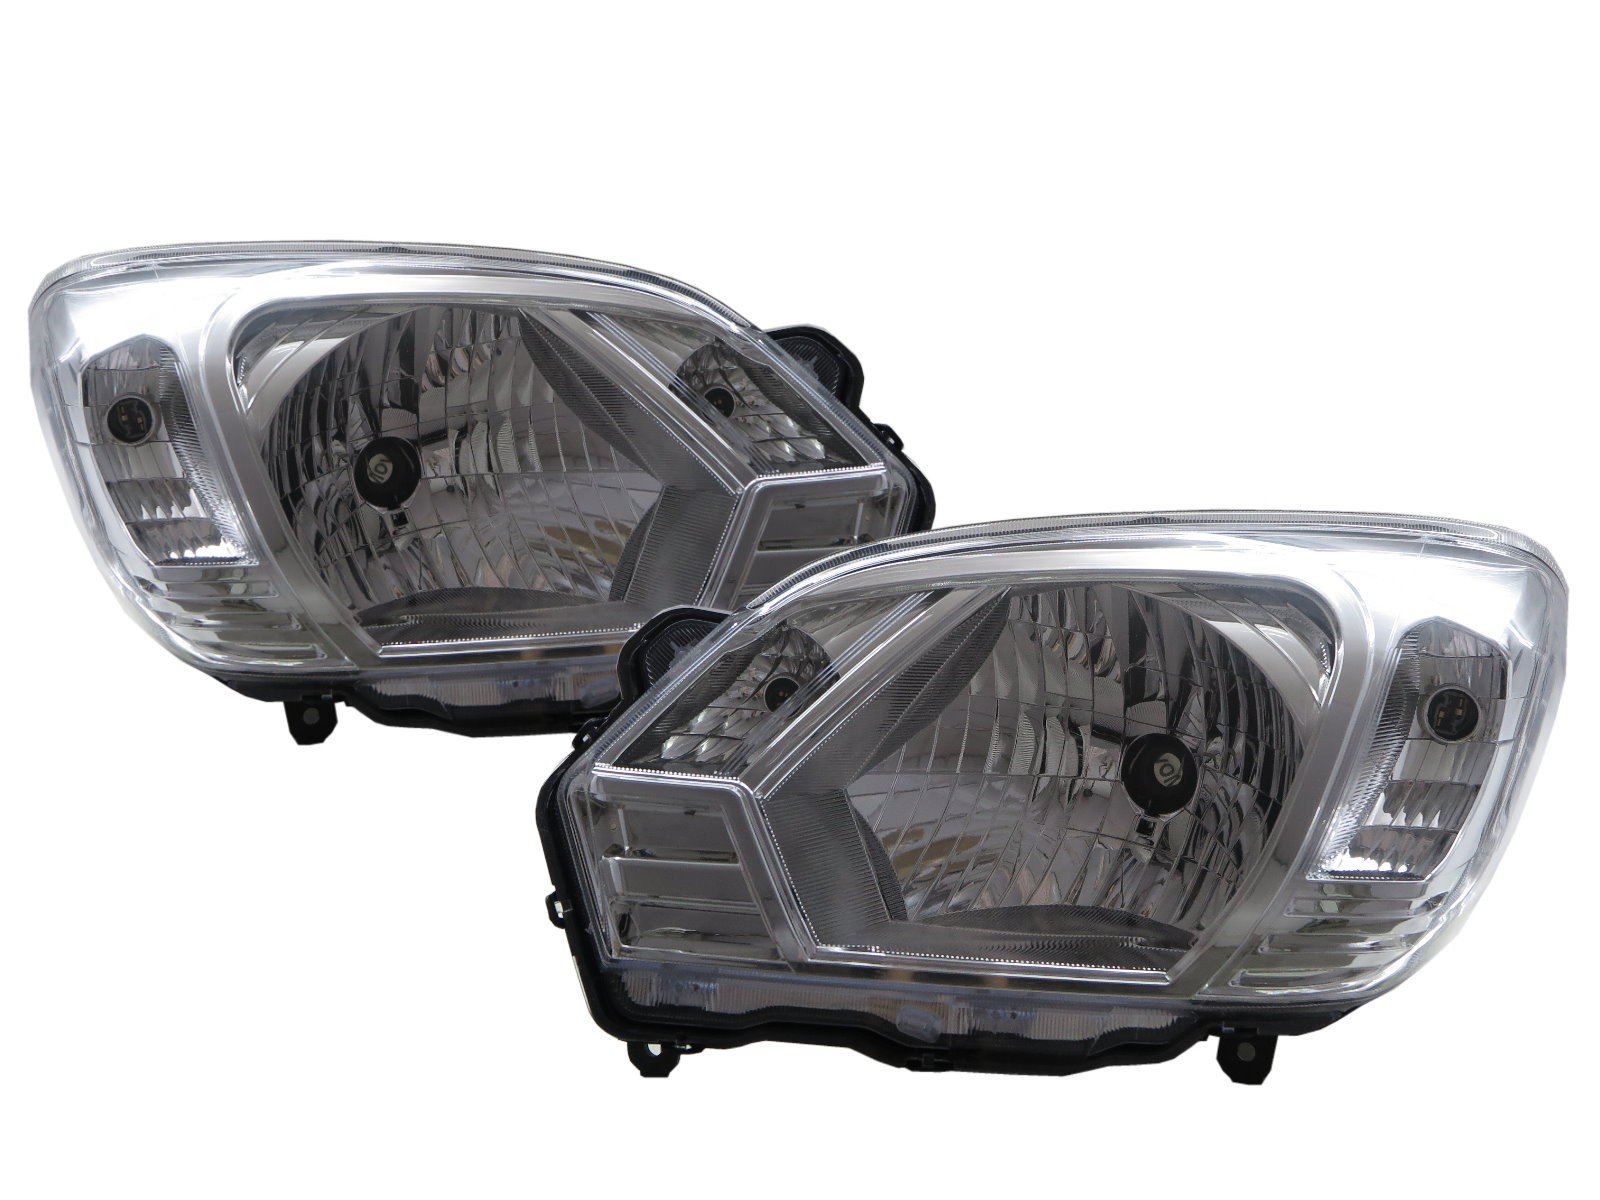 CrazyTheGod Veryca 2013-present Truck 2D/4D Clear Headlight Headlamp Chrome for Mitsubishi LHD